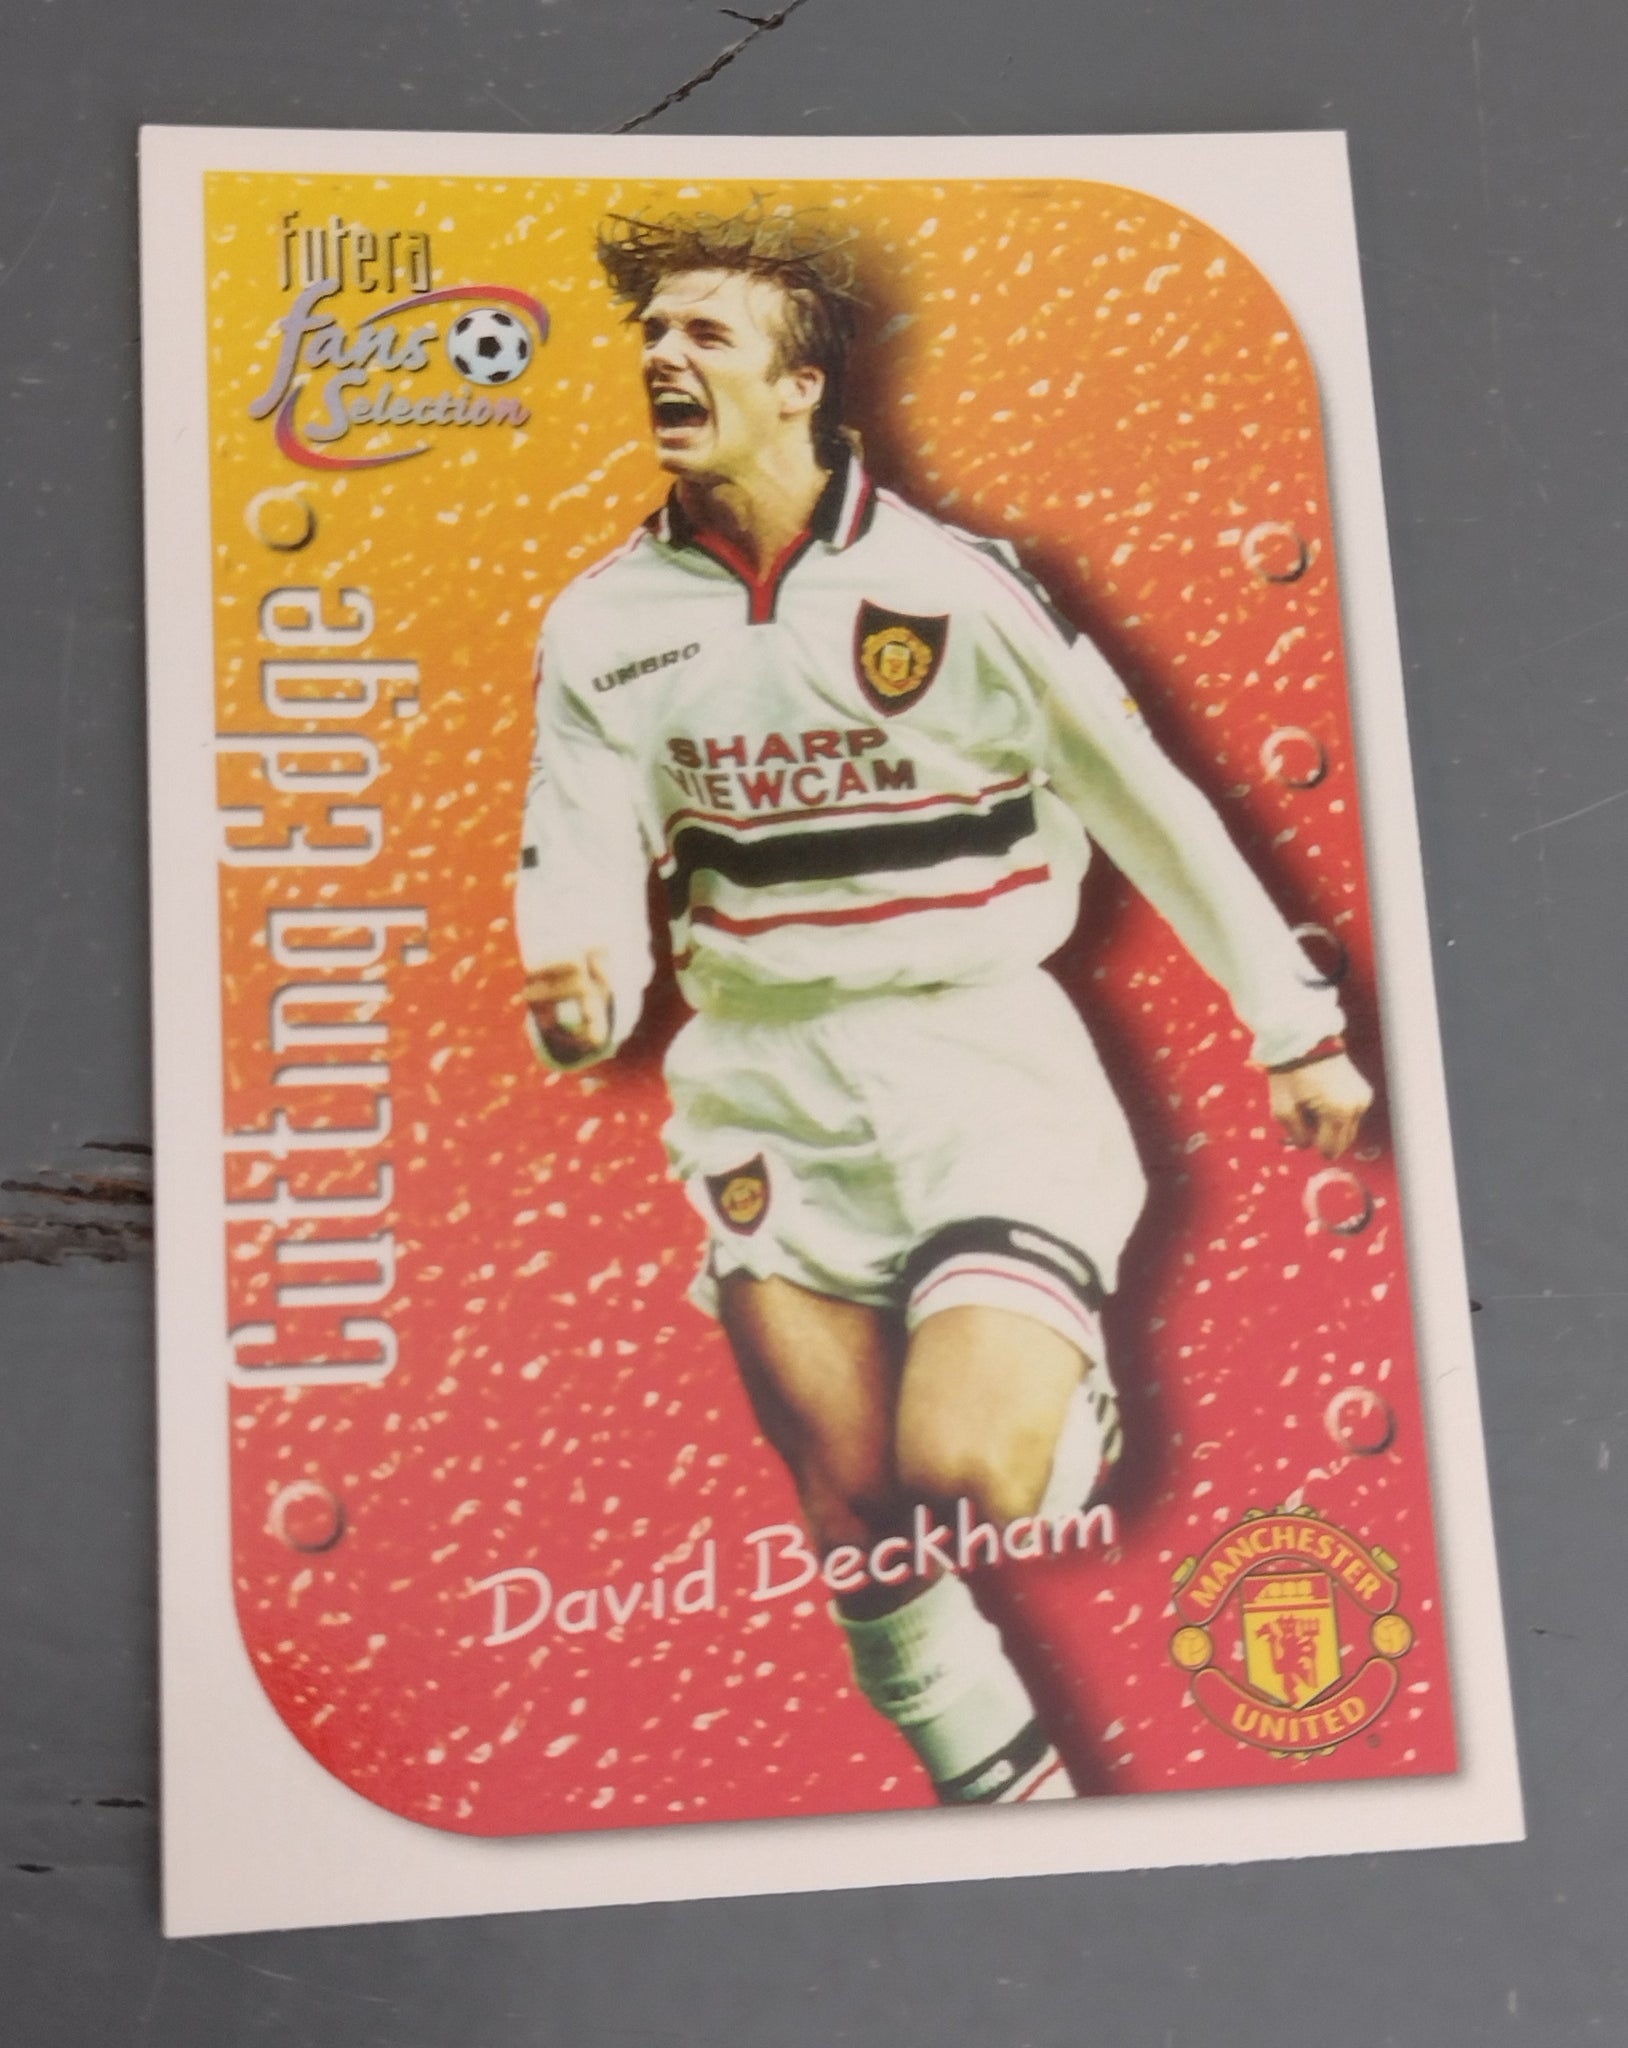 1999 Futera Fans Selection Manchester United David Beckham #7 Trading Card